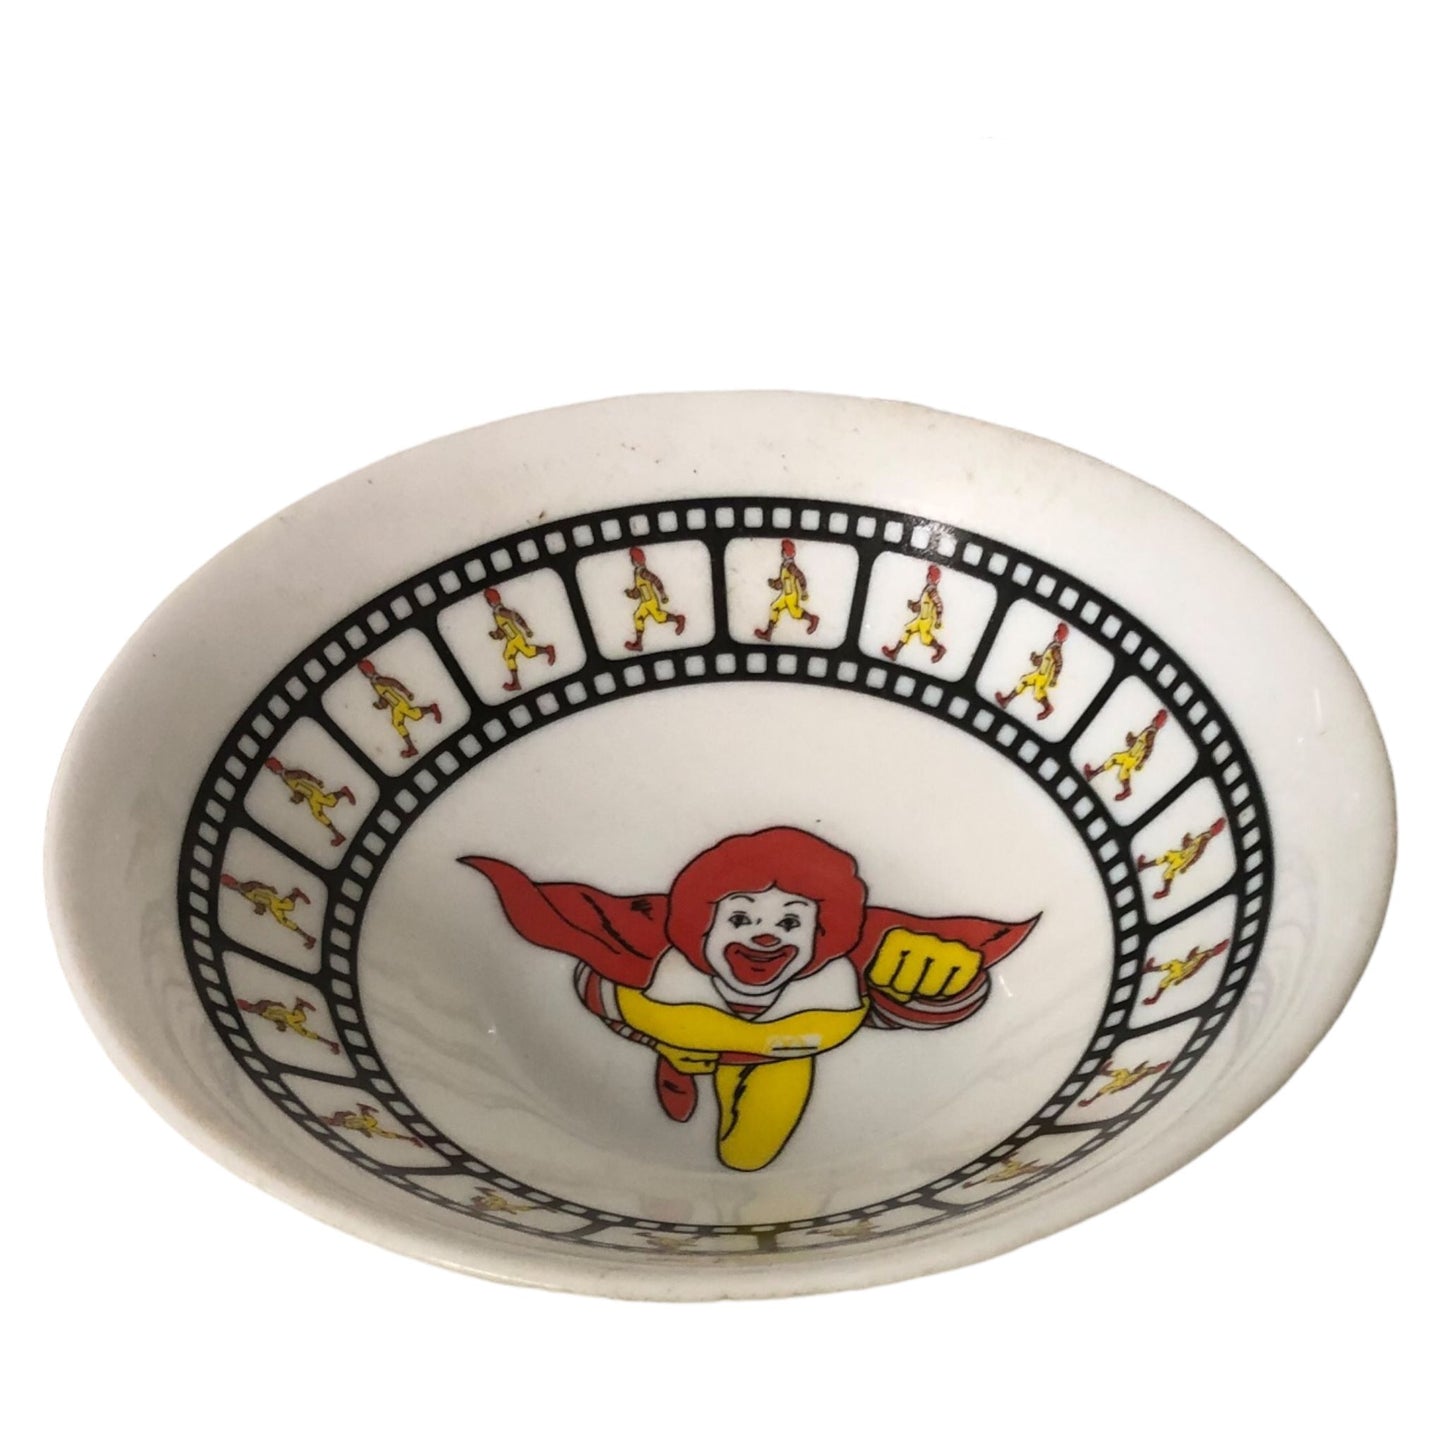 Ronald McDonald White Breakfast Mug, Bowl and small plate - Complete Vintage Set